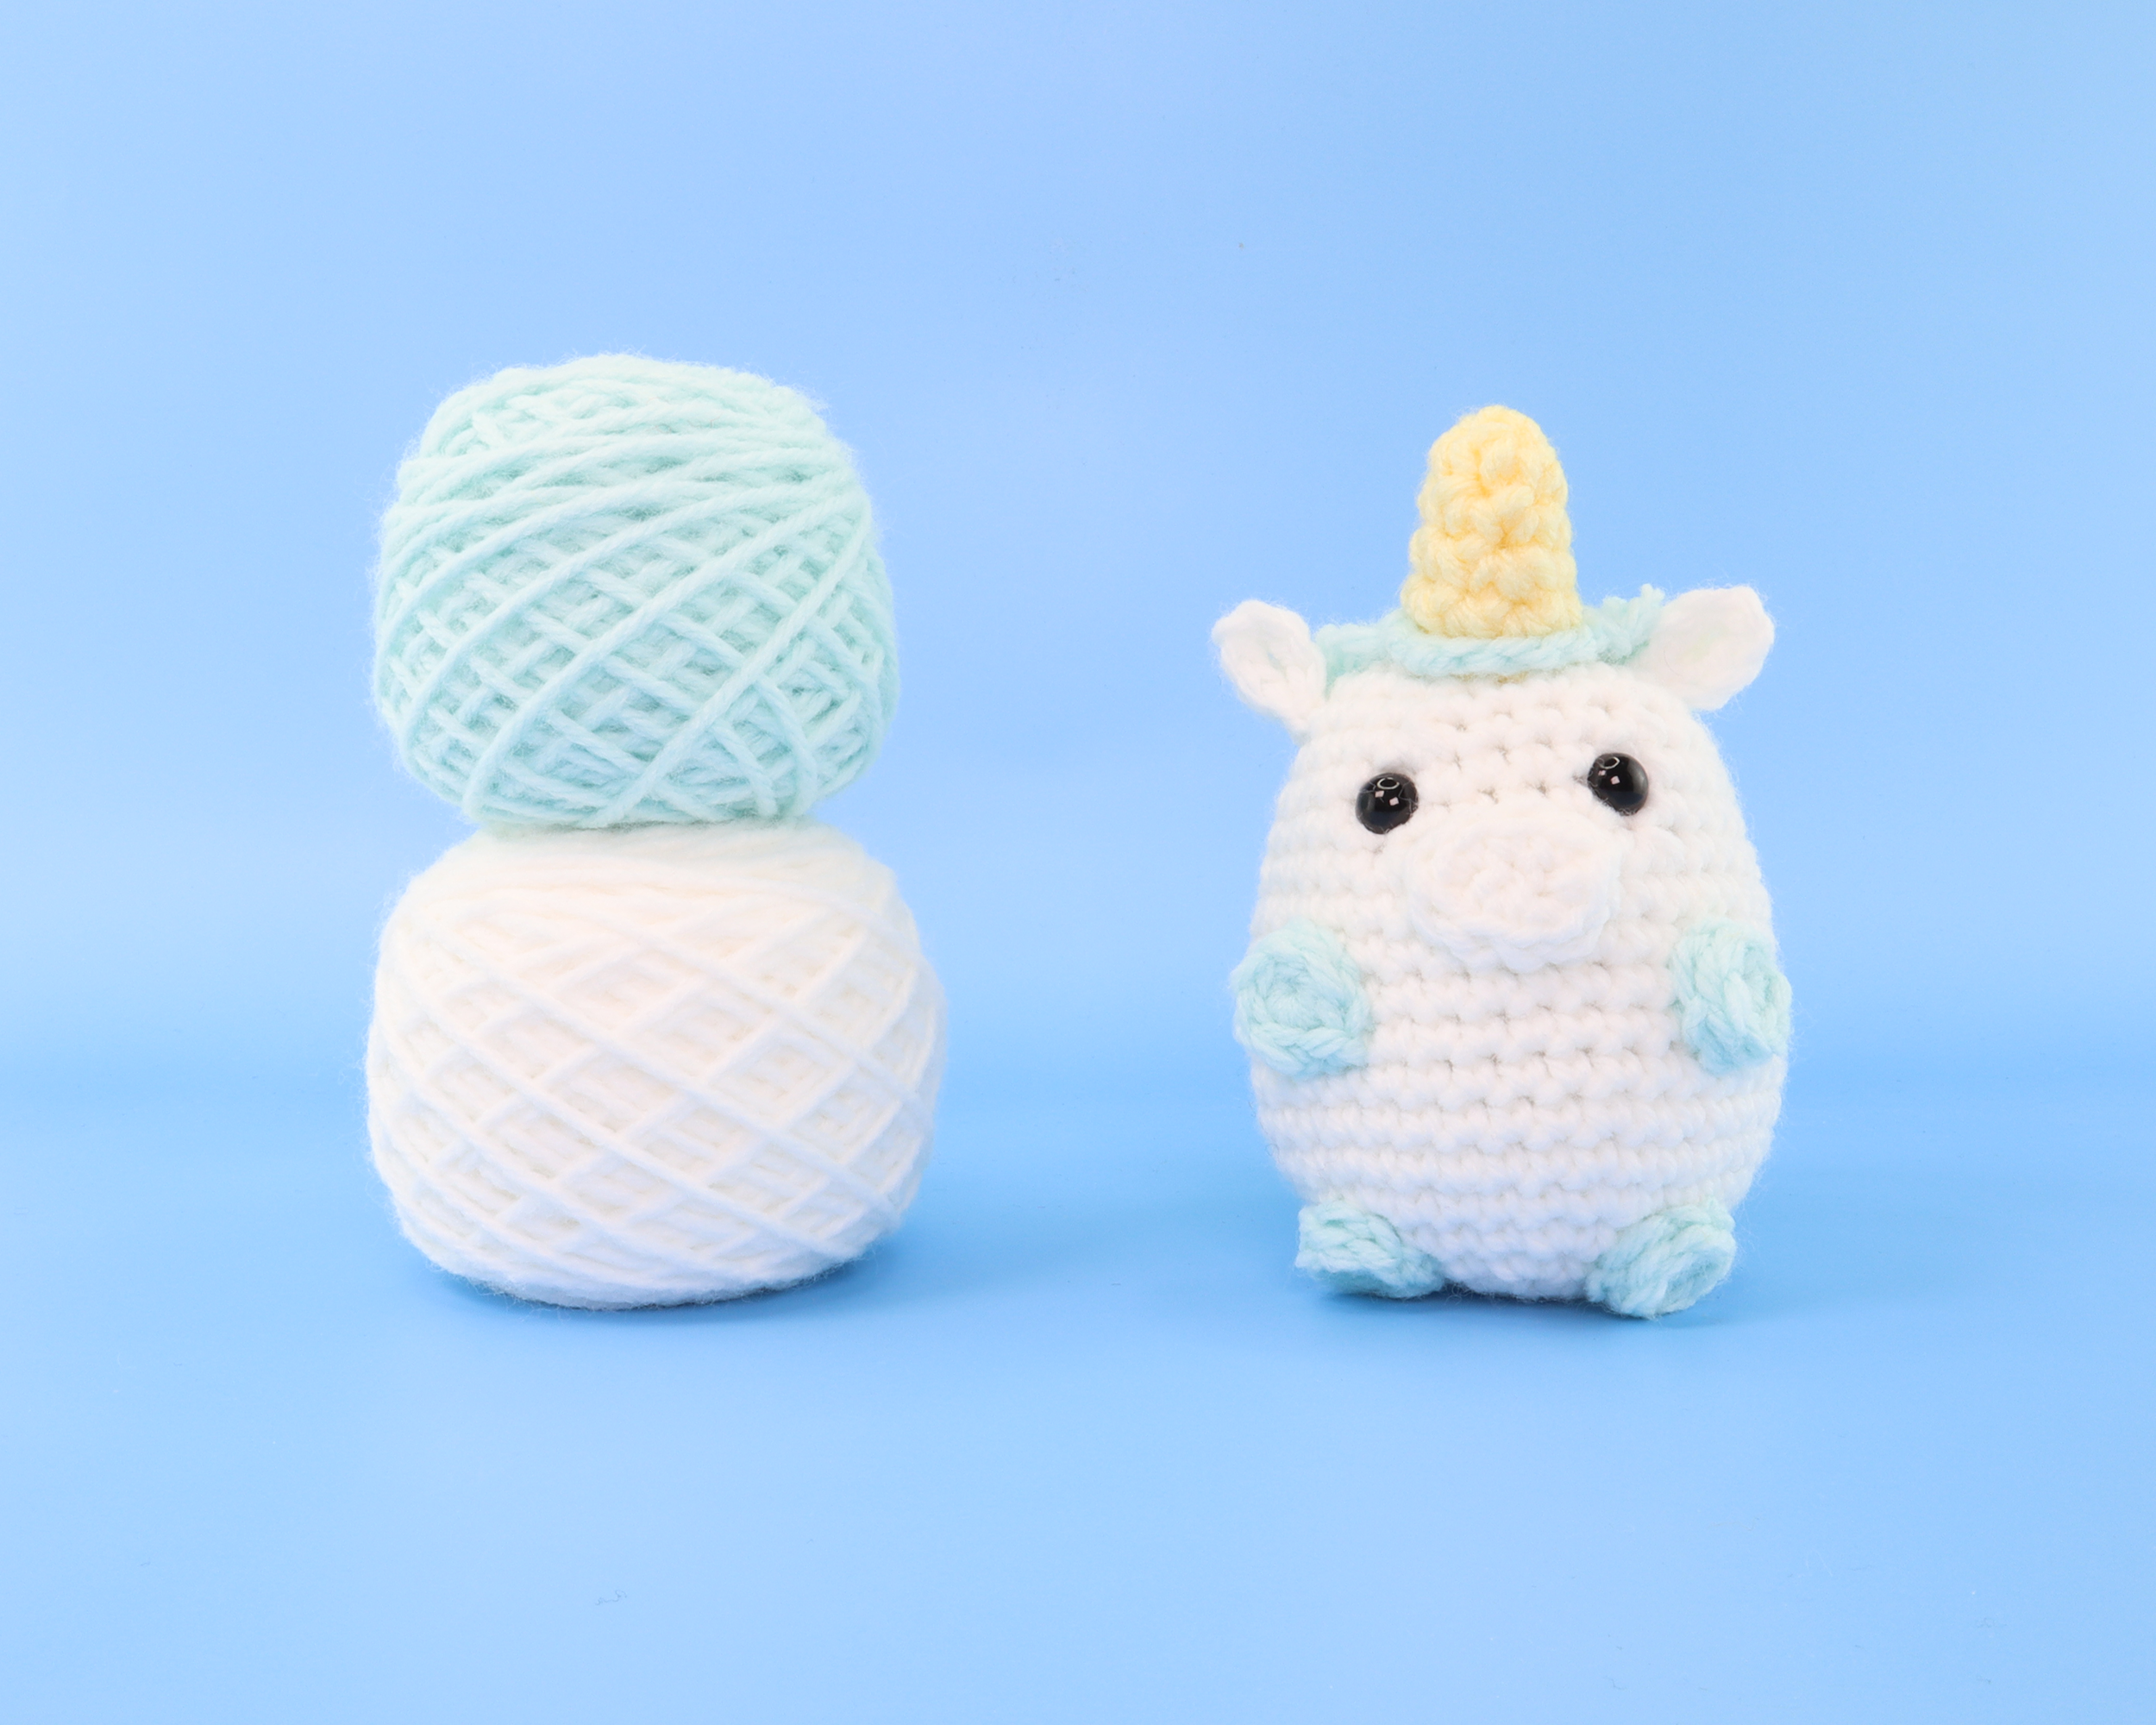 Jasmine The Unicorn Crochet Kit